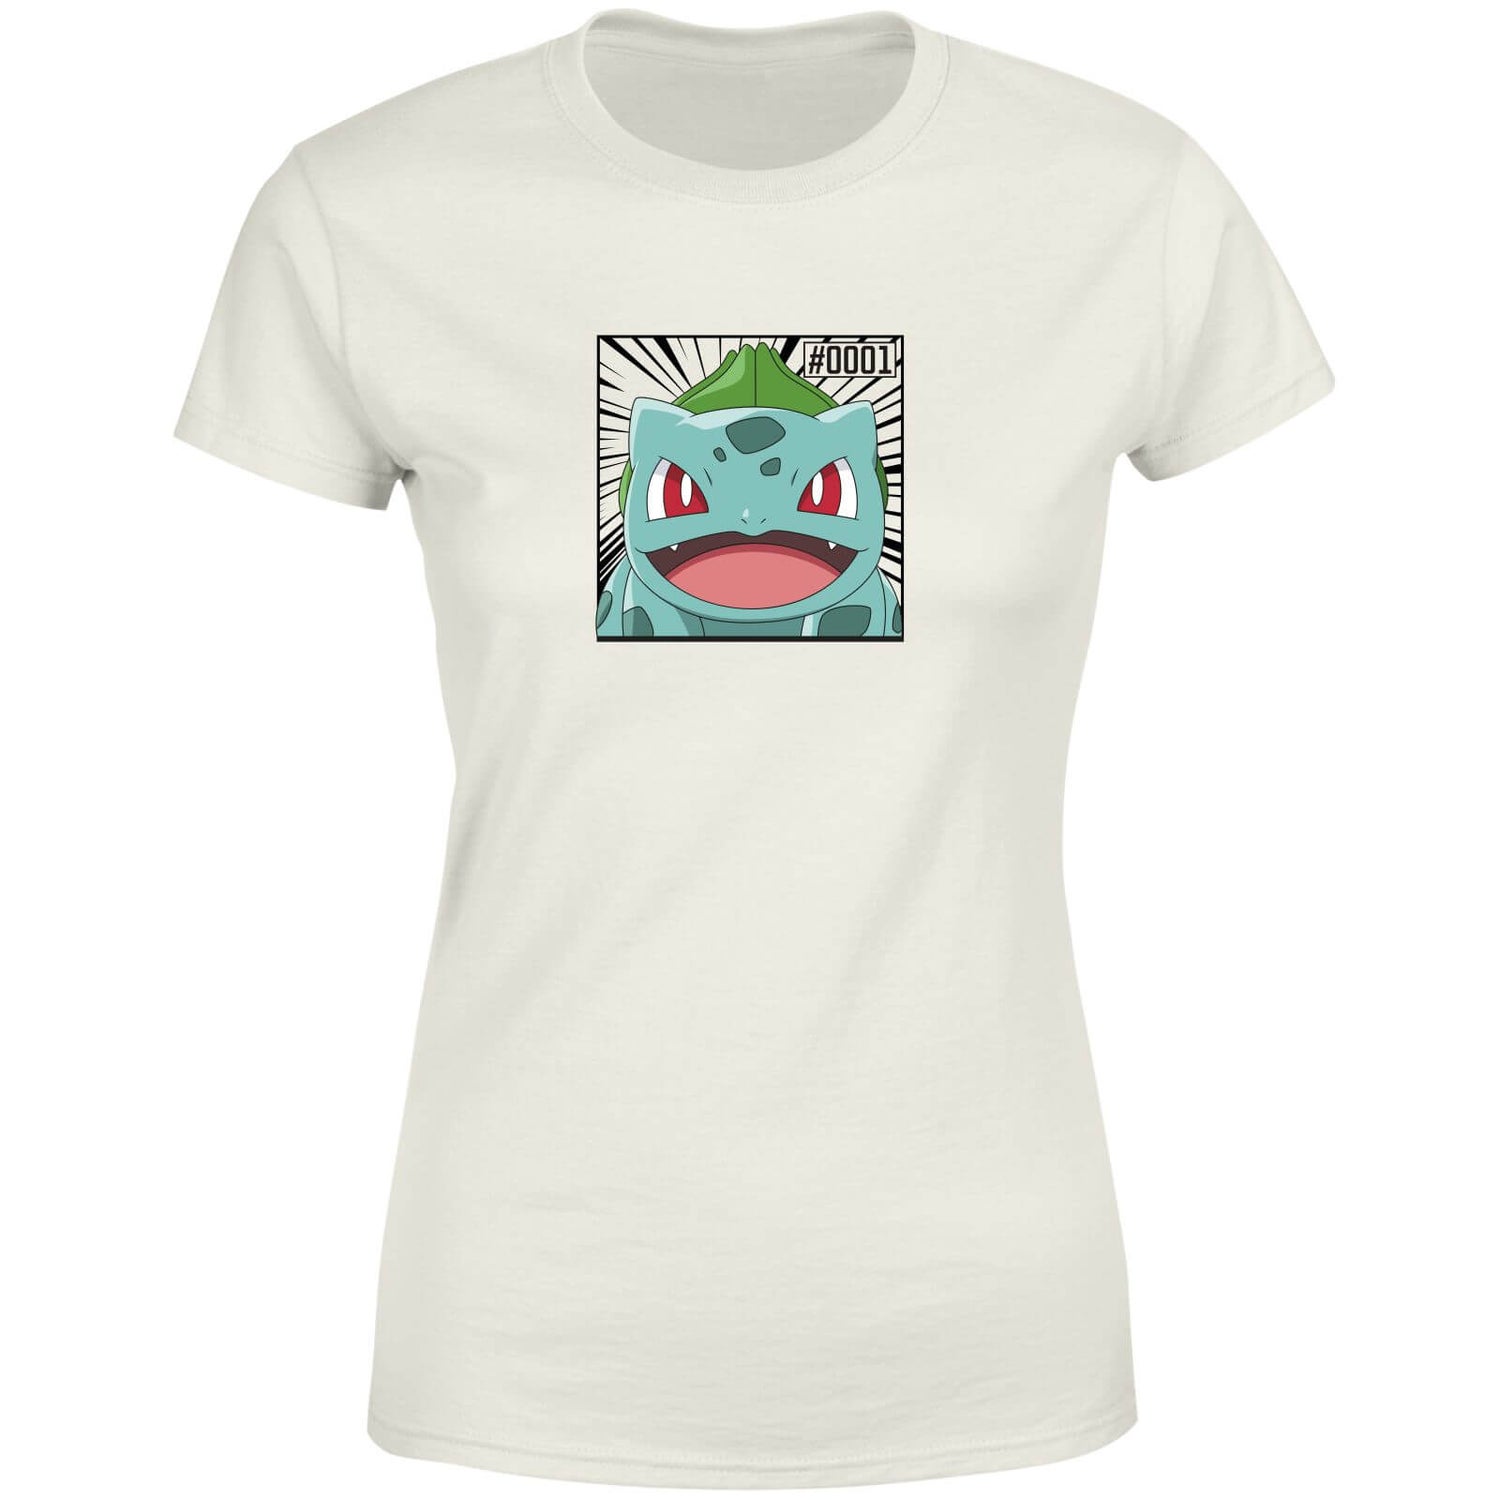 Pokémon Pokédex Bulbasaur #0001 Women's T-Shirt - Cream